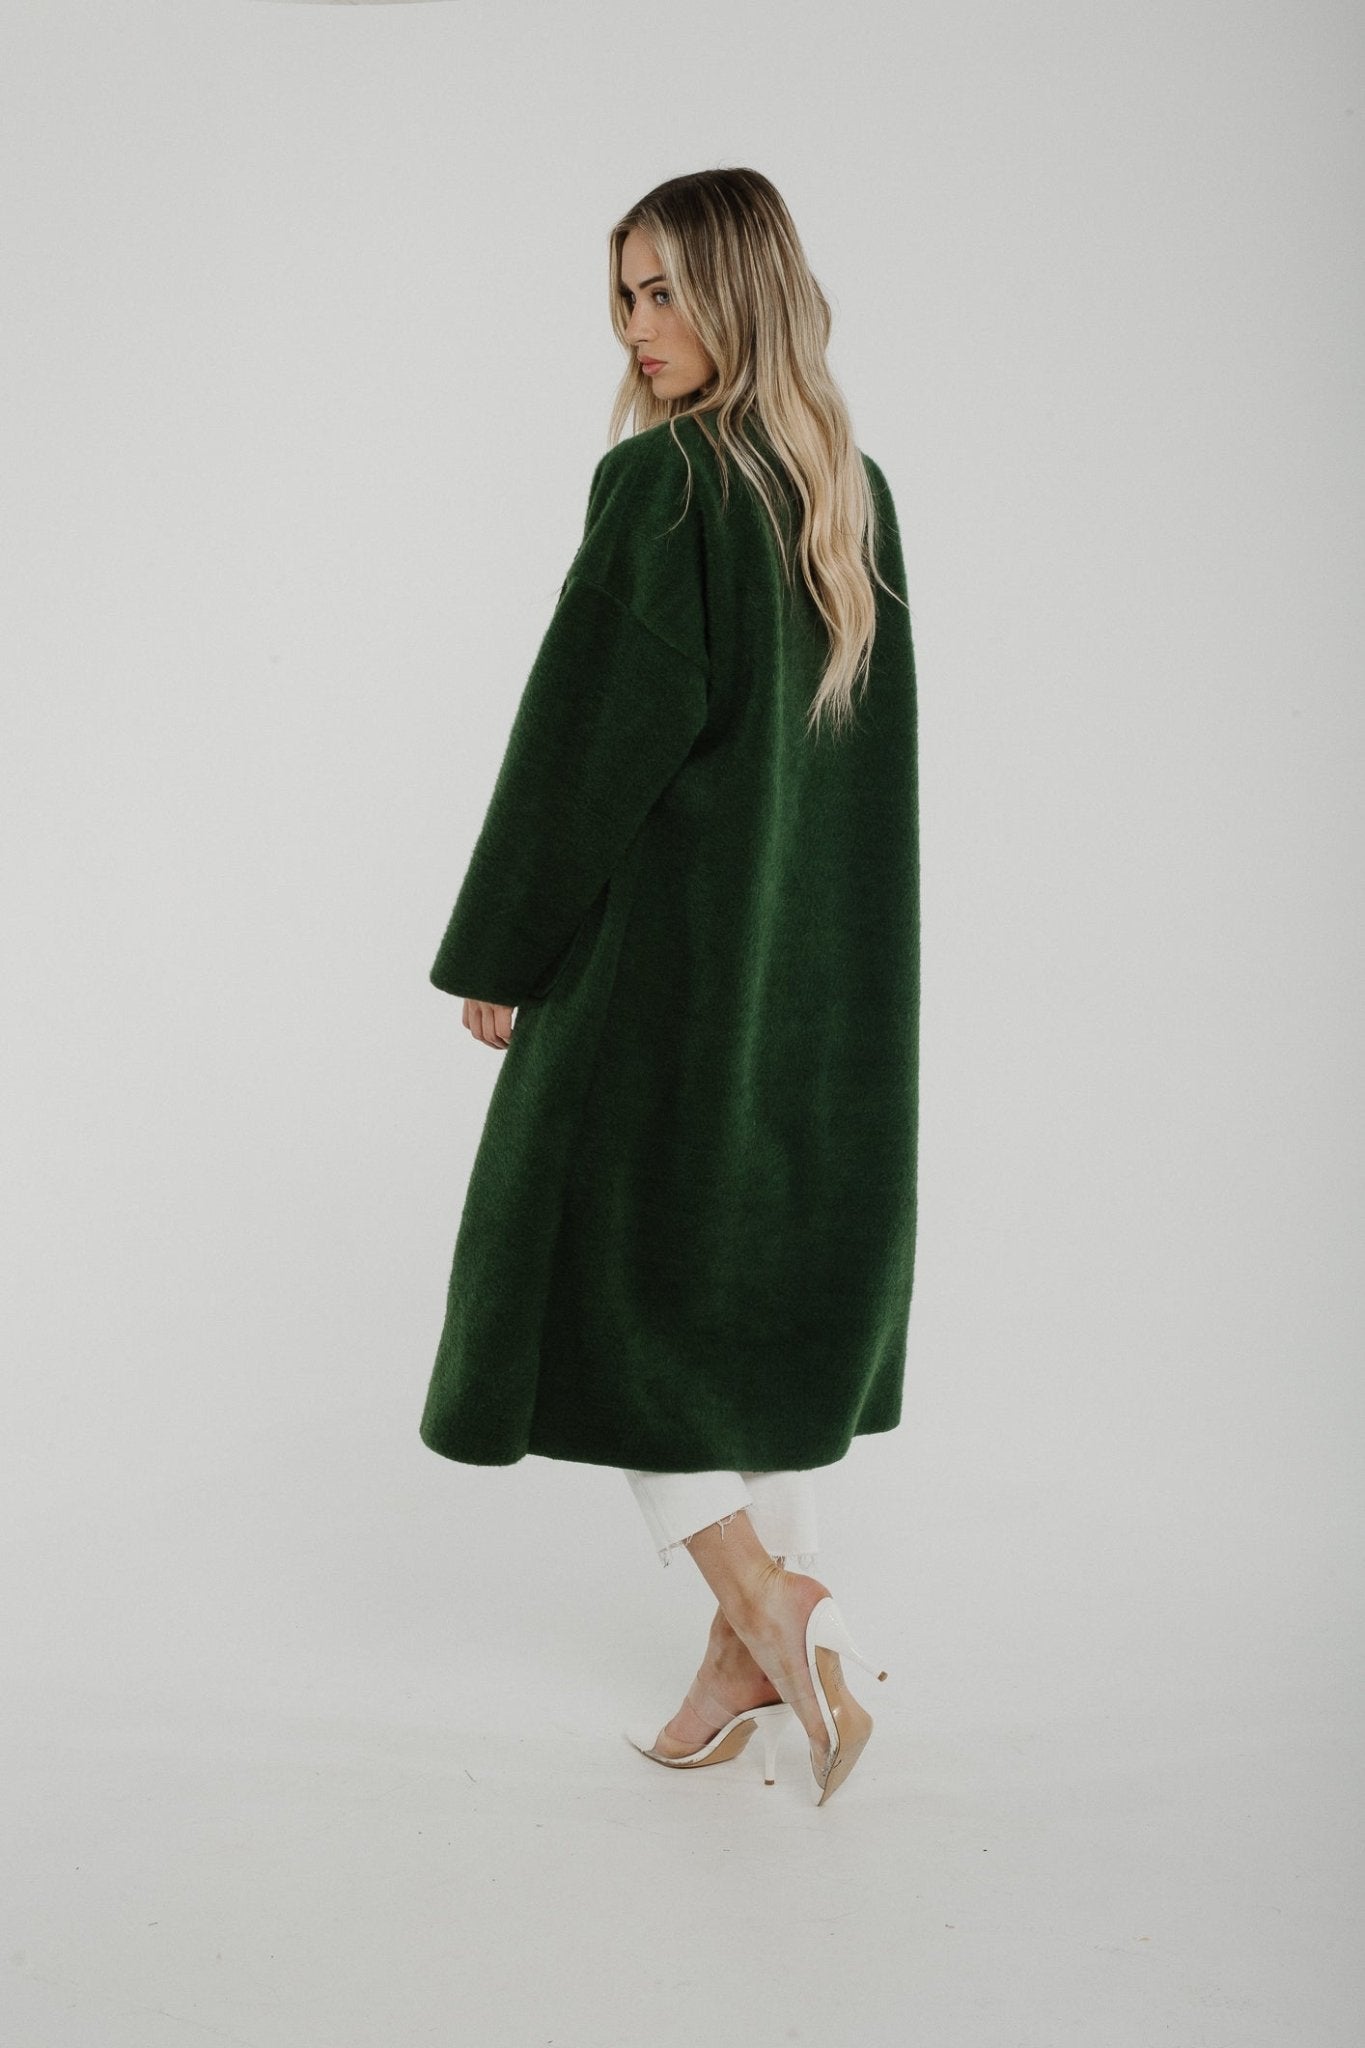 Indie Coat In Green - The Walk in Wardrobe